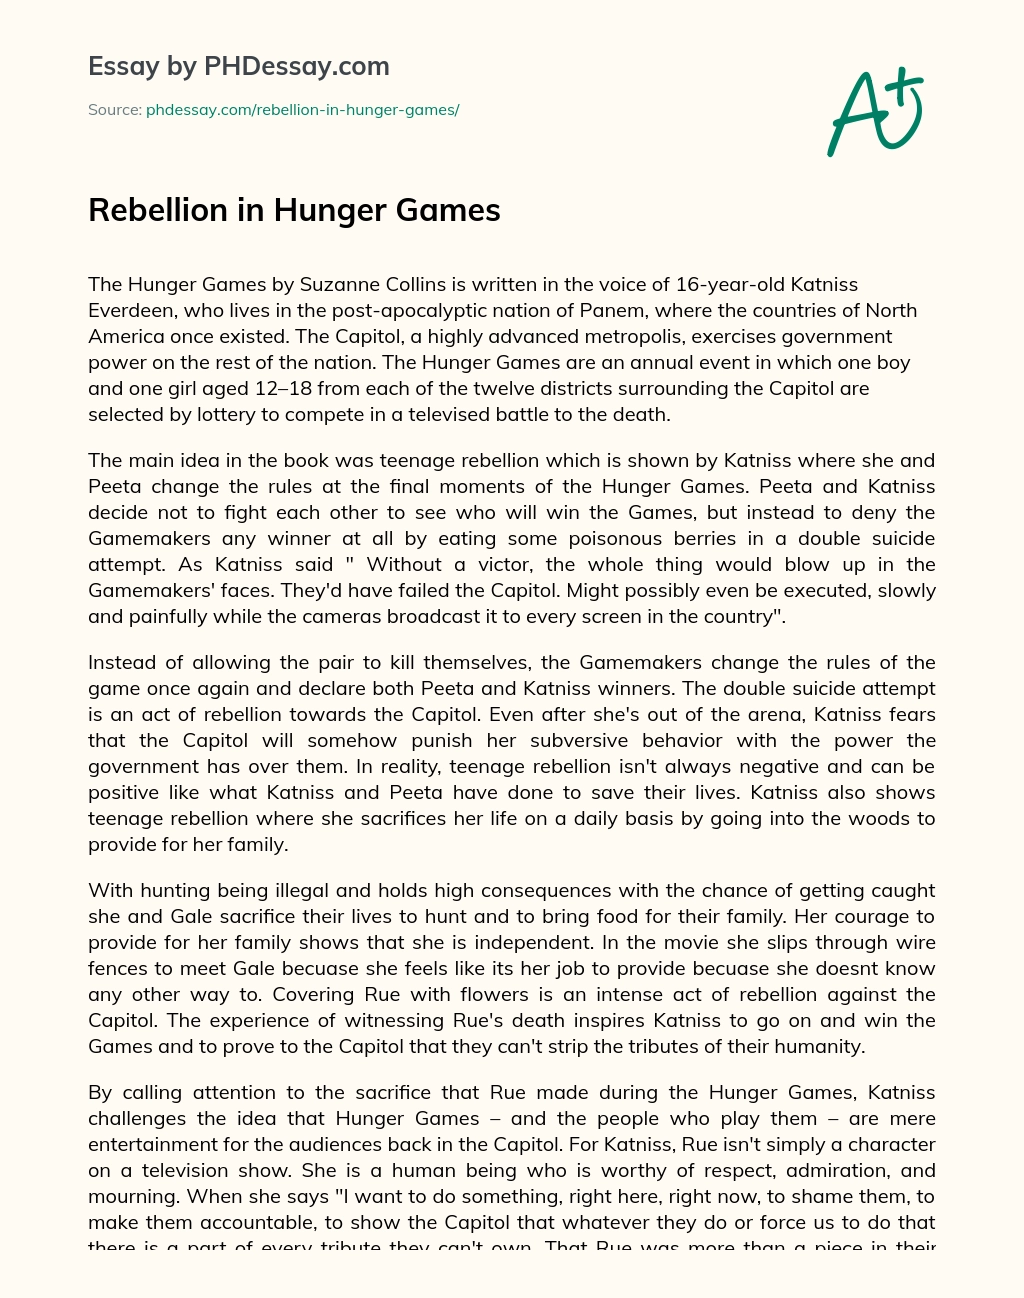 Rebellion in Hunger Games essay